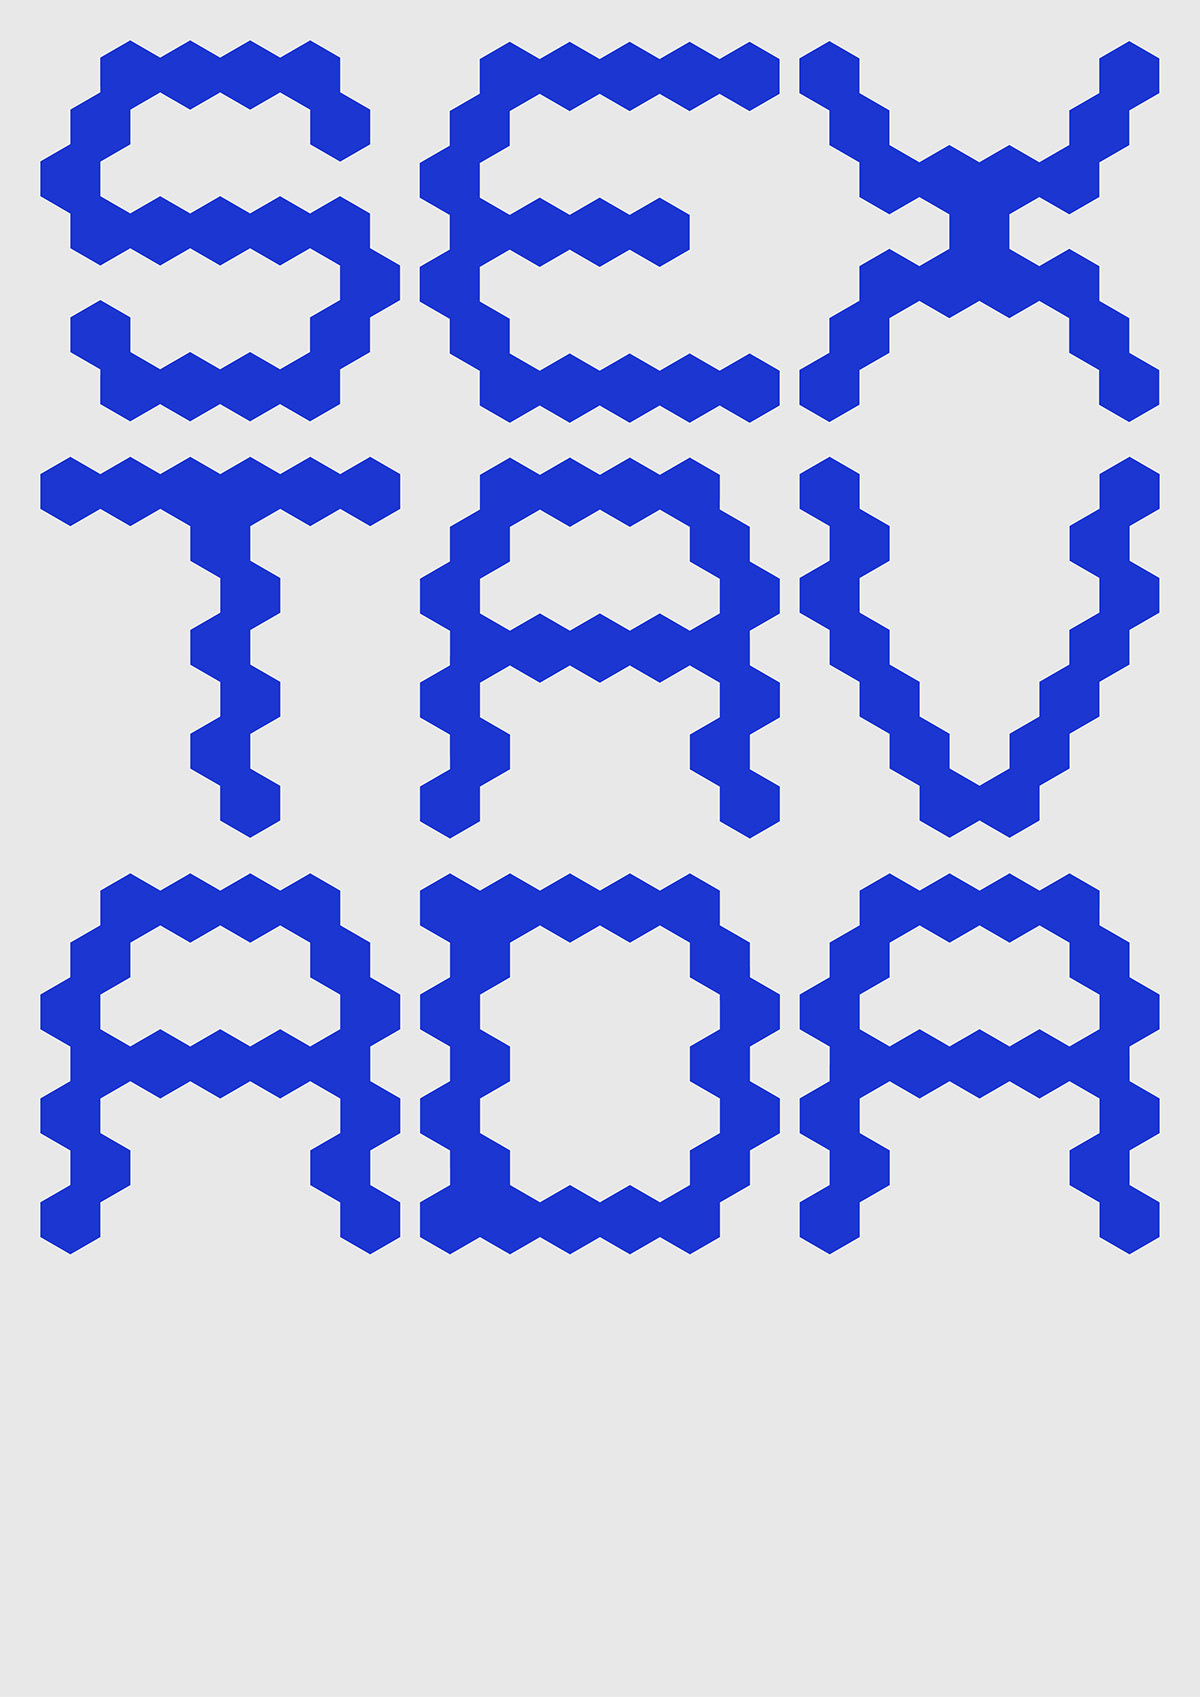 Adobe Portfolio graphic design  hexagon monospace type Typeface typography   visual identity